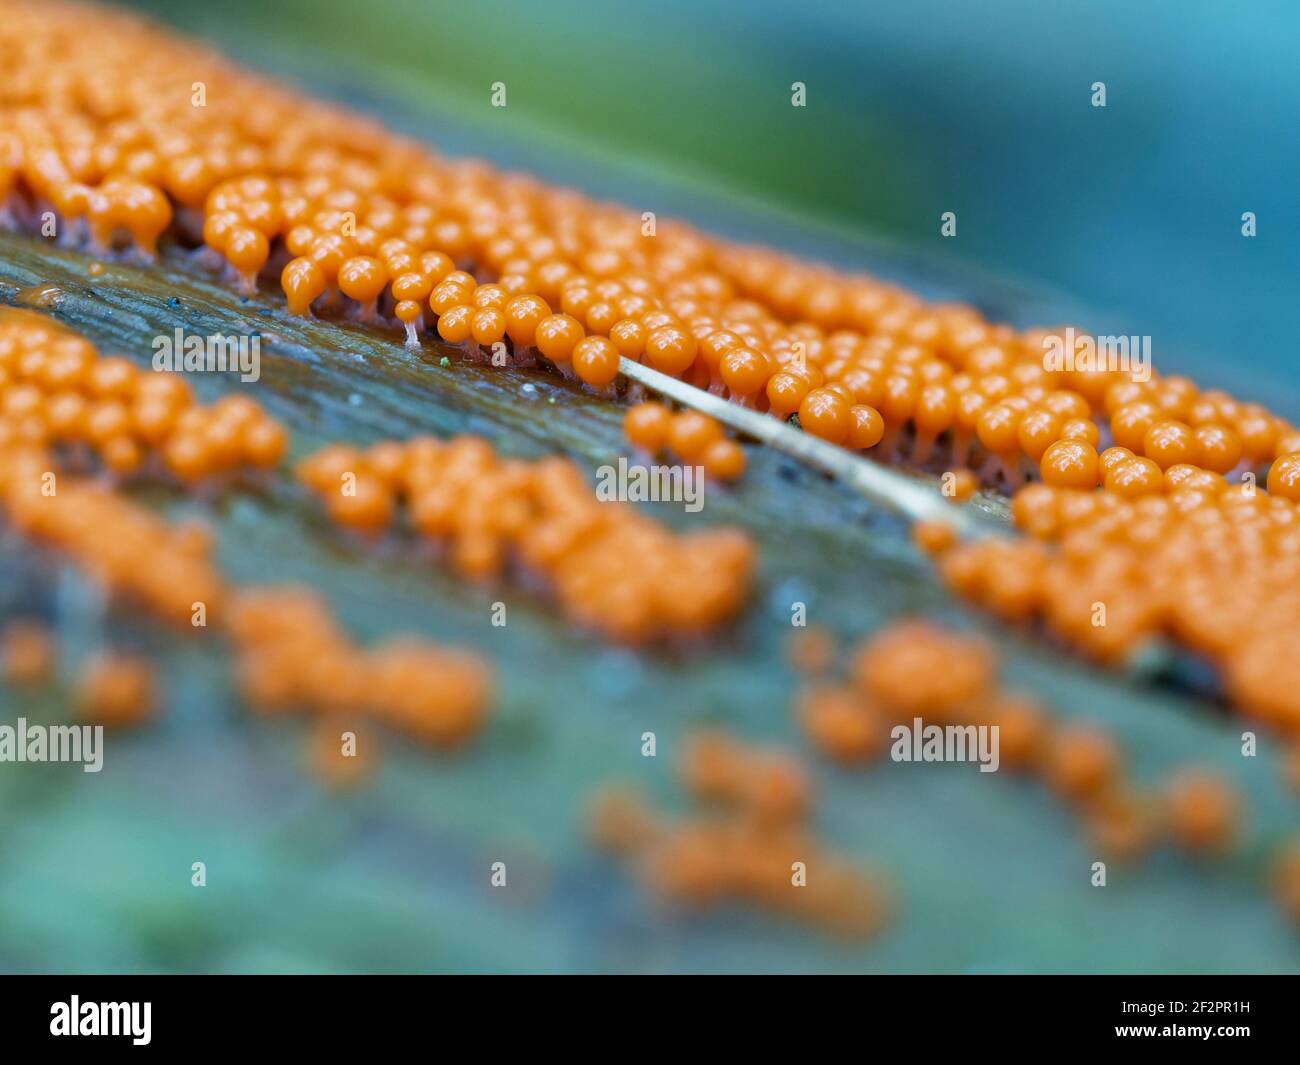 Orange slime mold in autumn Stock Photo